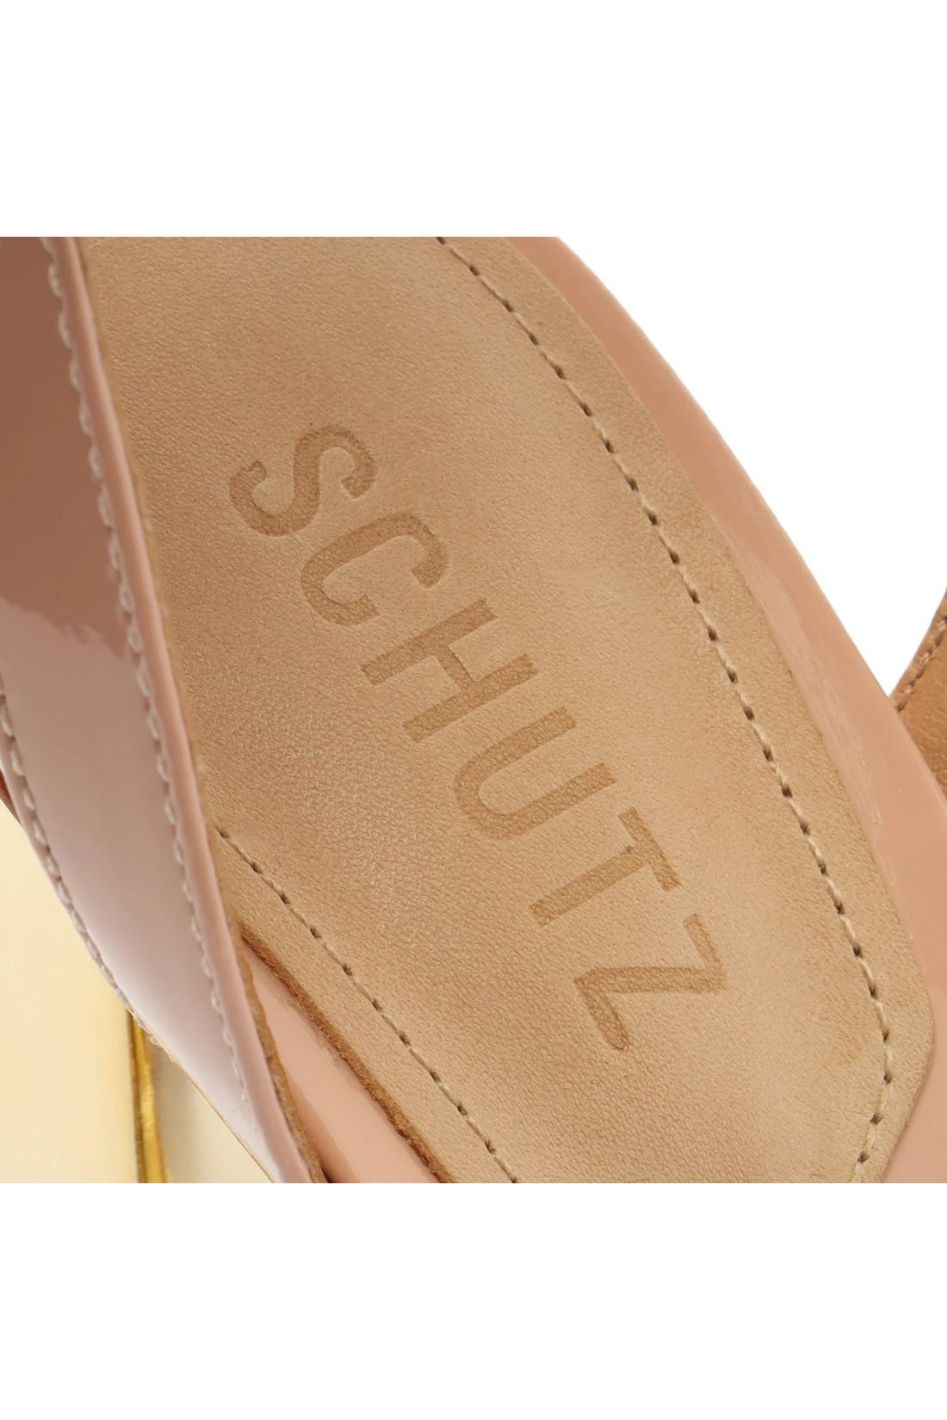 Filipa Patent Leather Sandal - Expressive Collective CO.